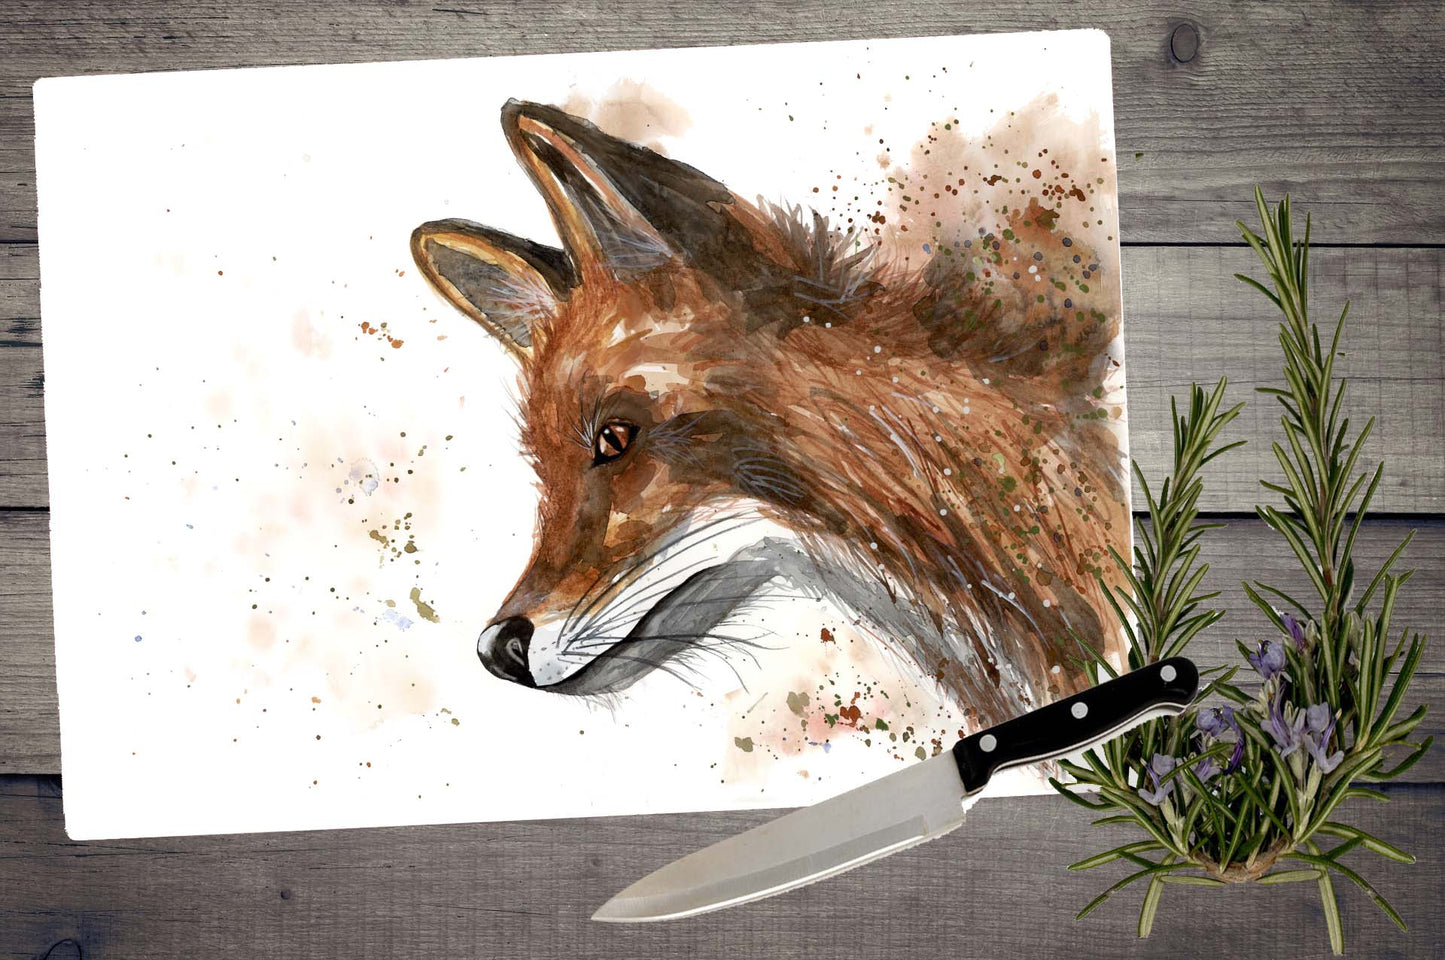 Fox chopping board / Worktop saver